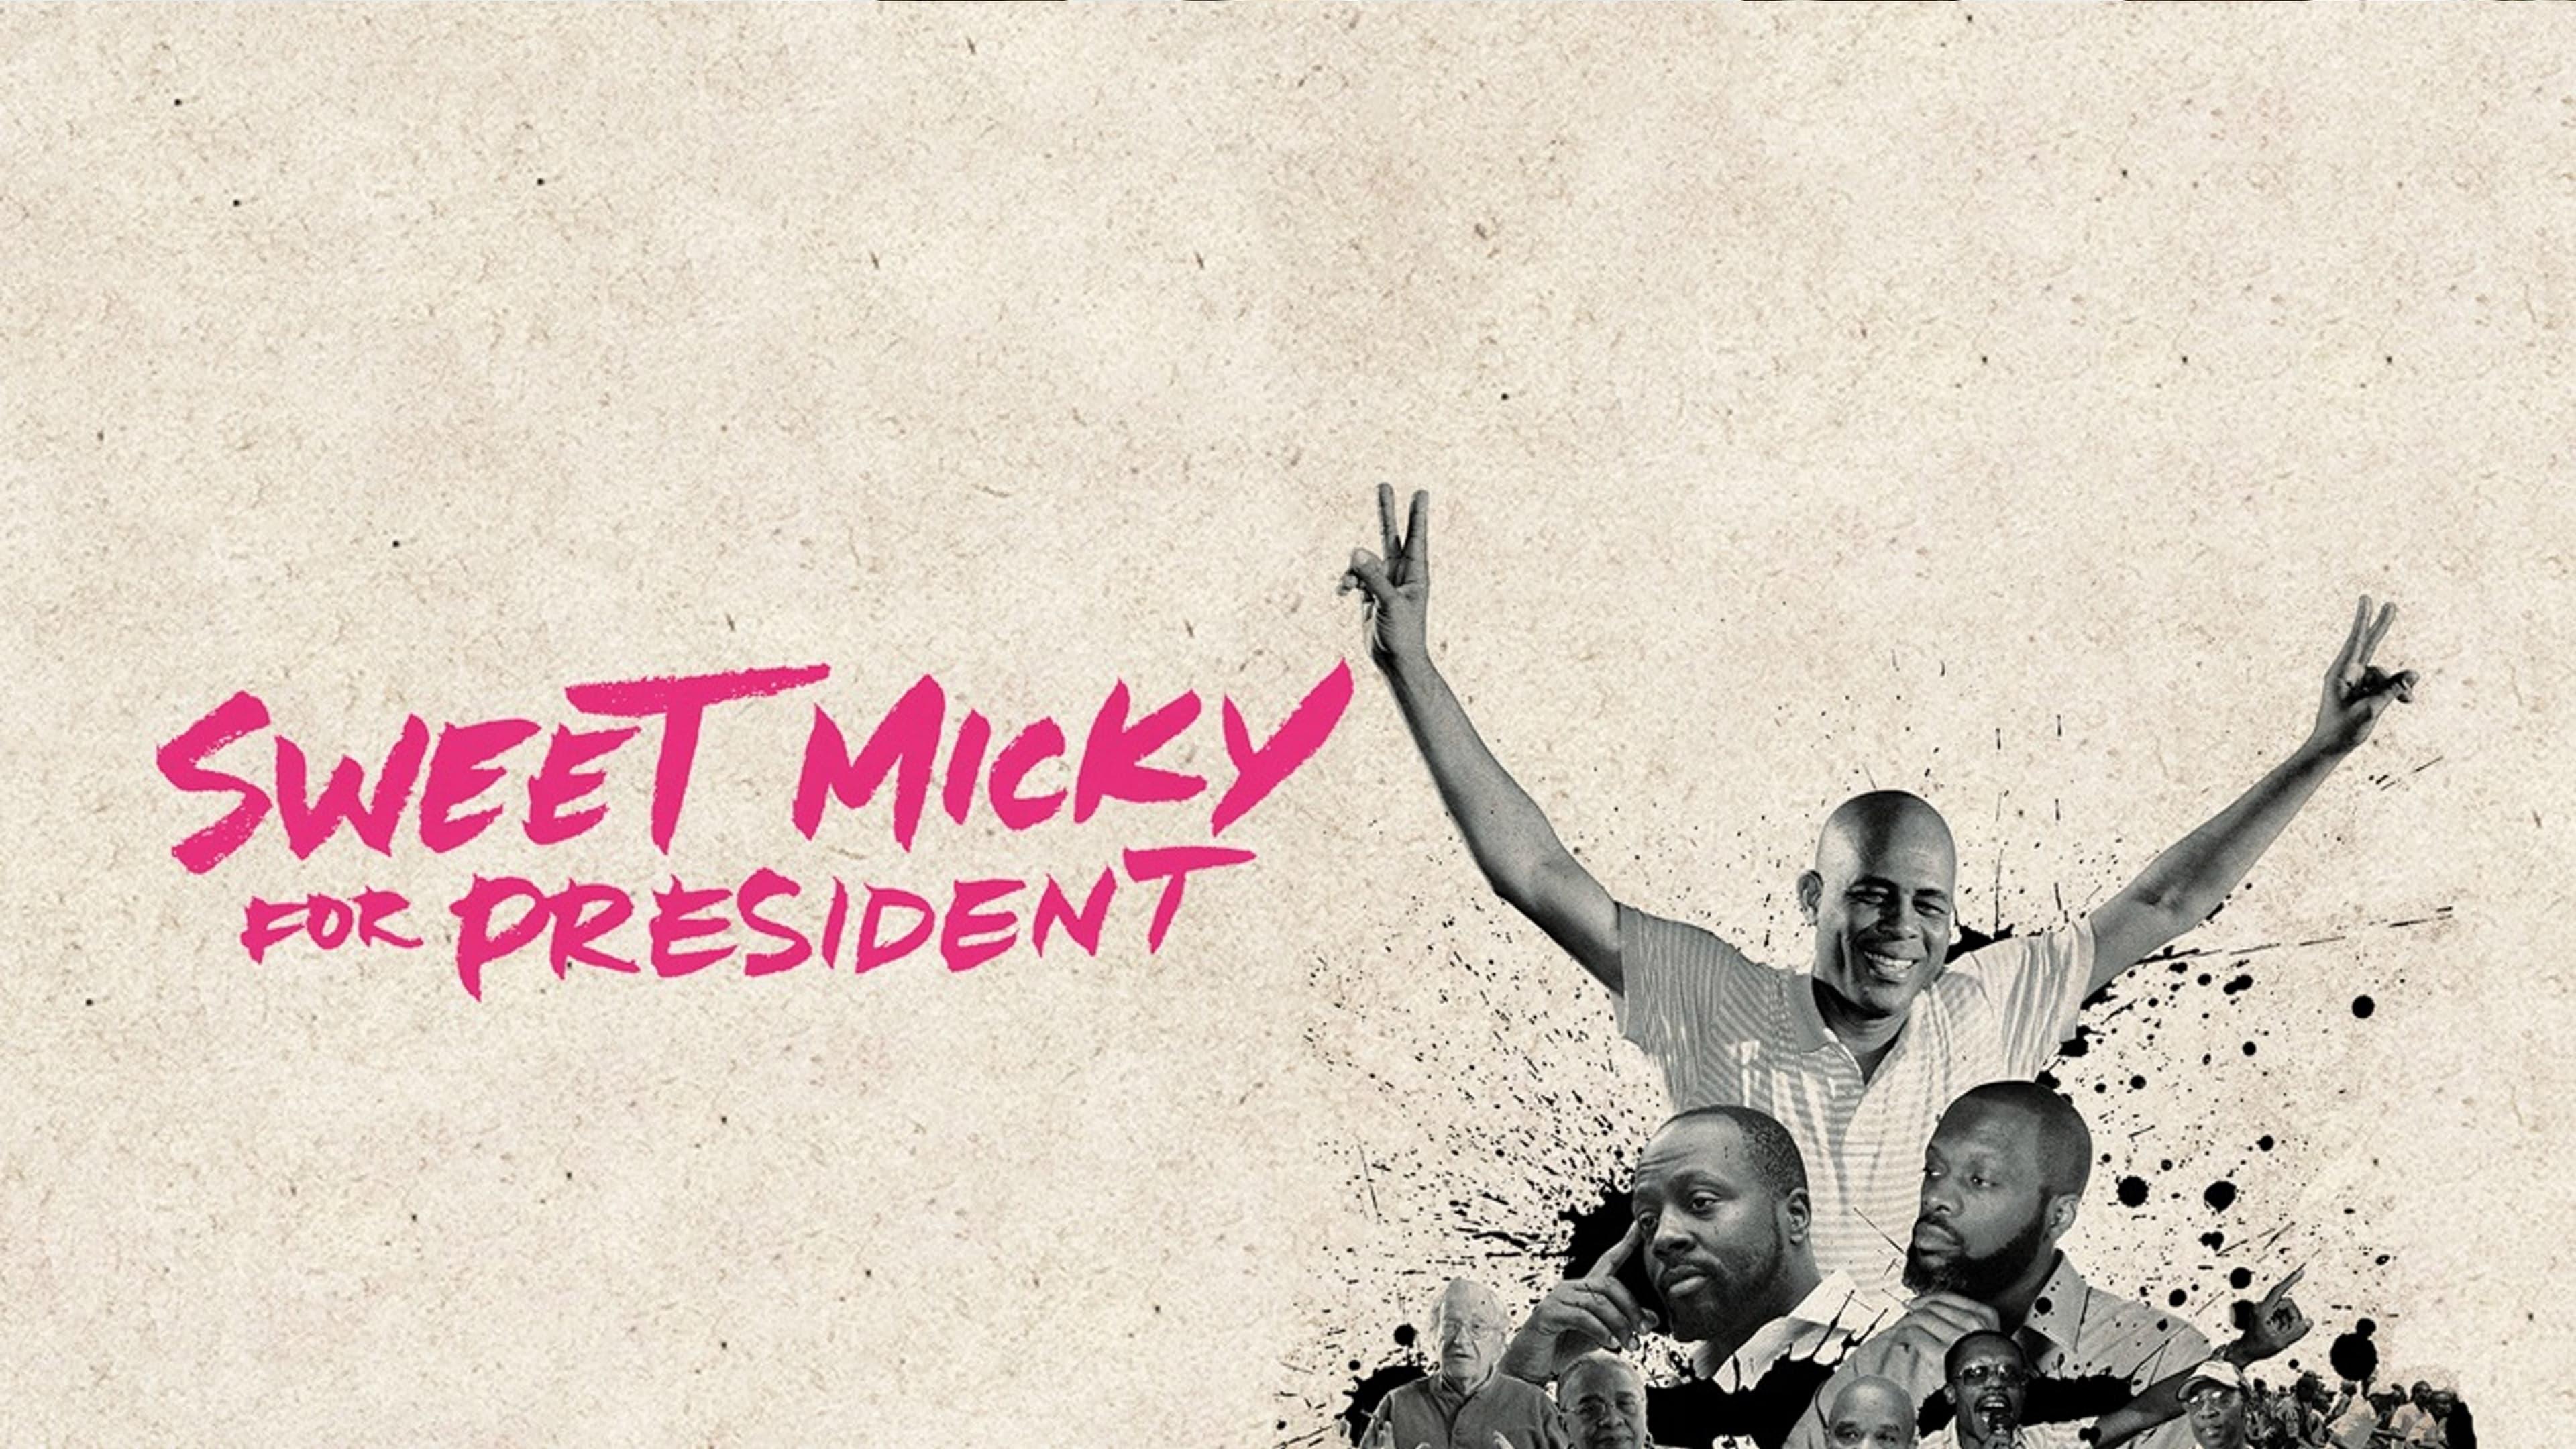 Sweet Micky for President backdrop